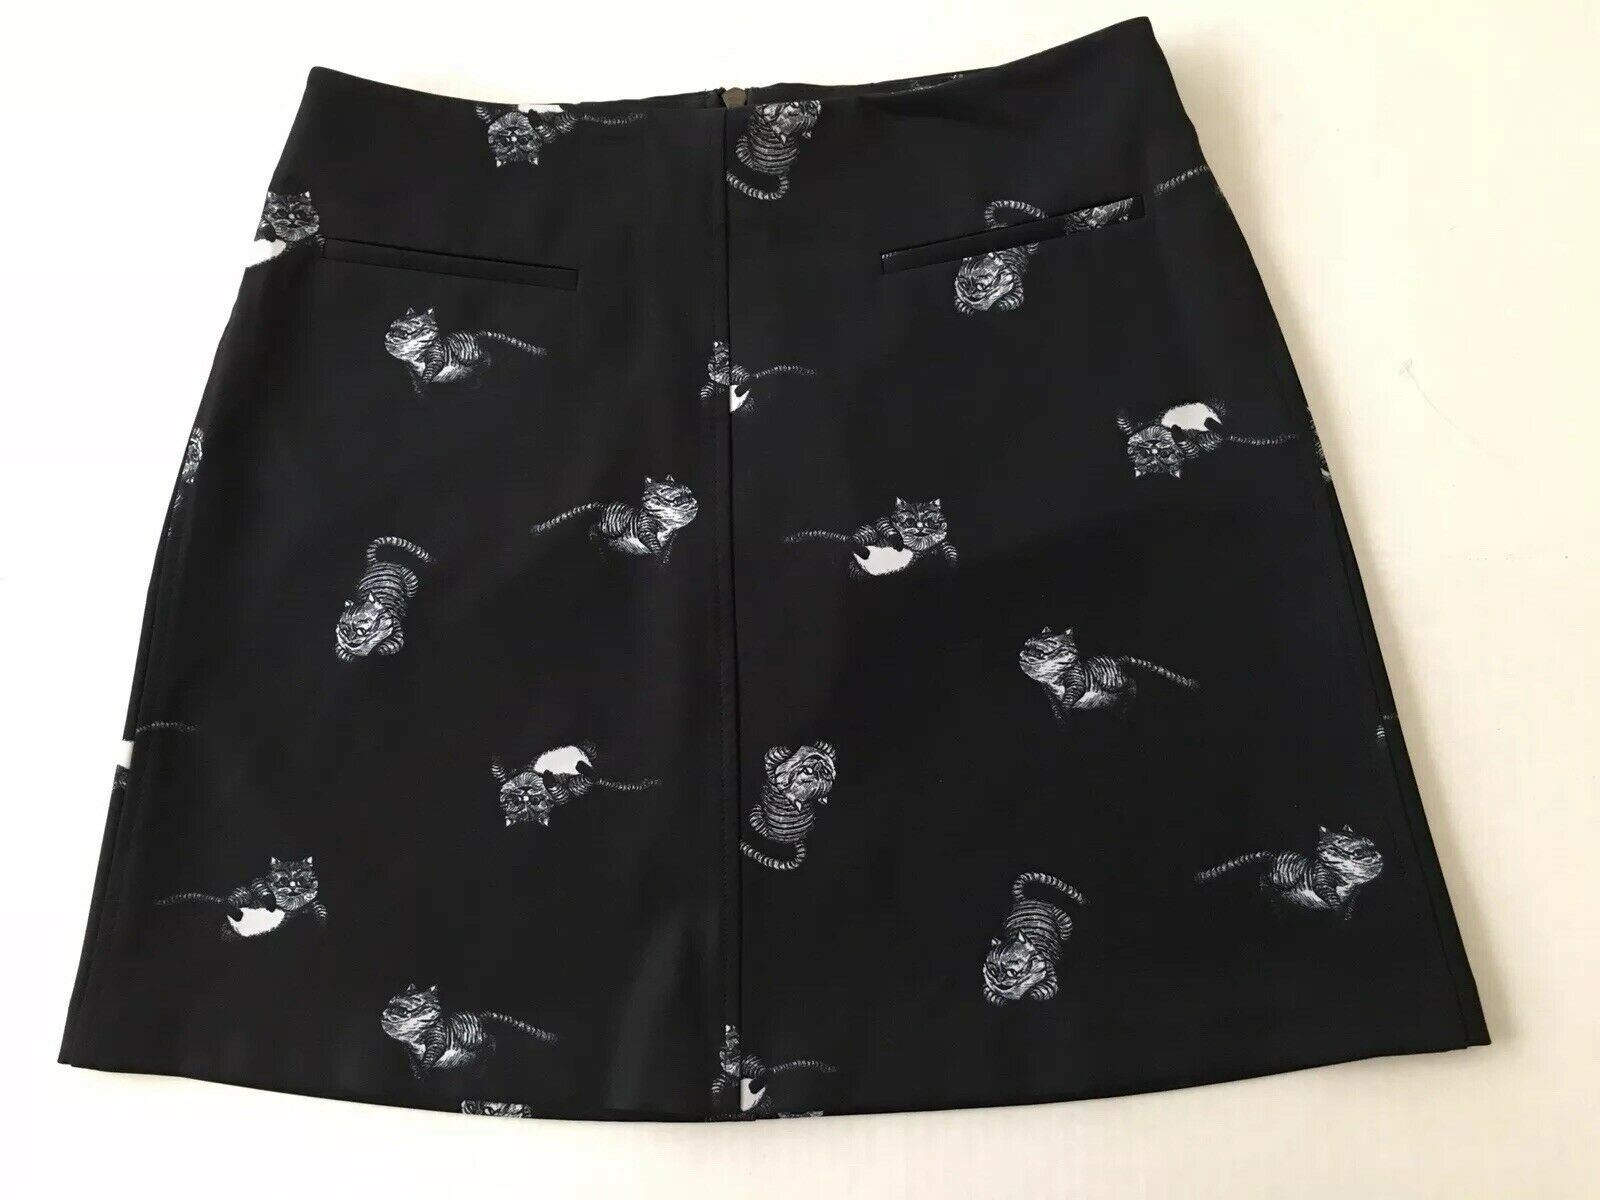 Miniskirt - 1600x1200 Wallpaper - teahub.io